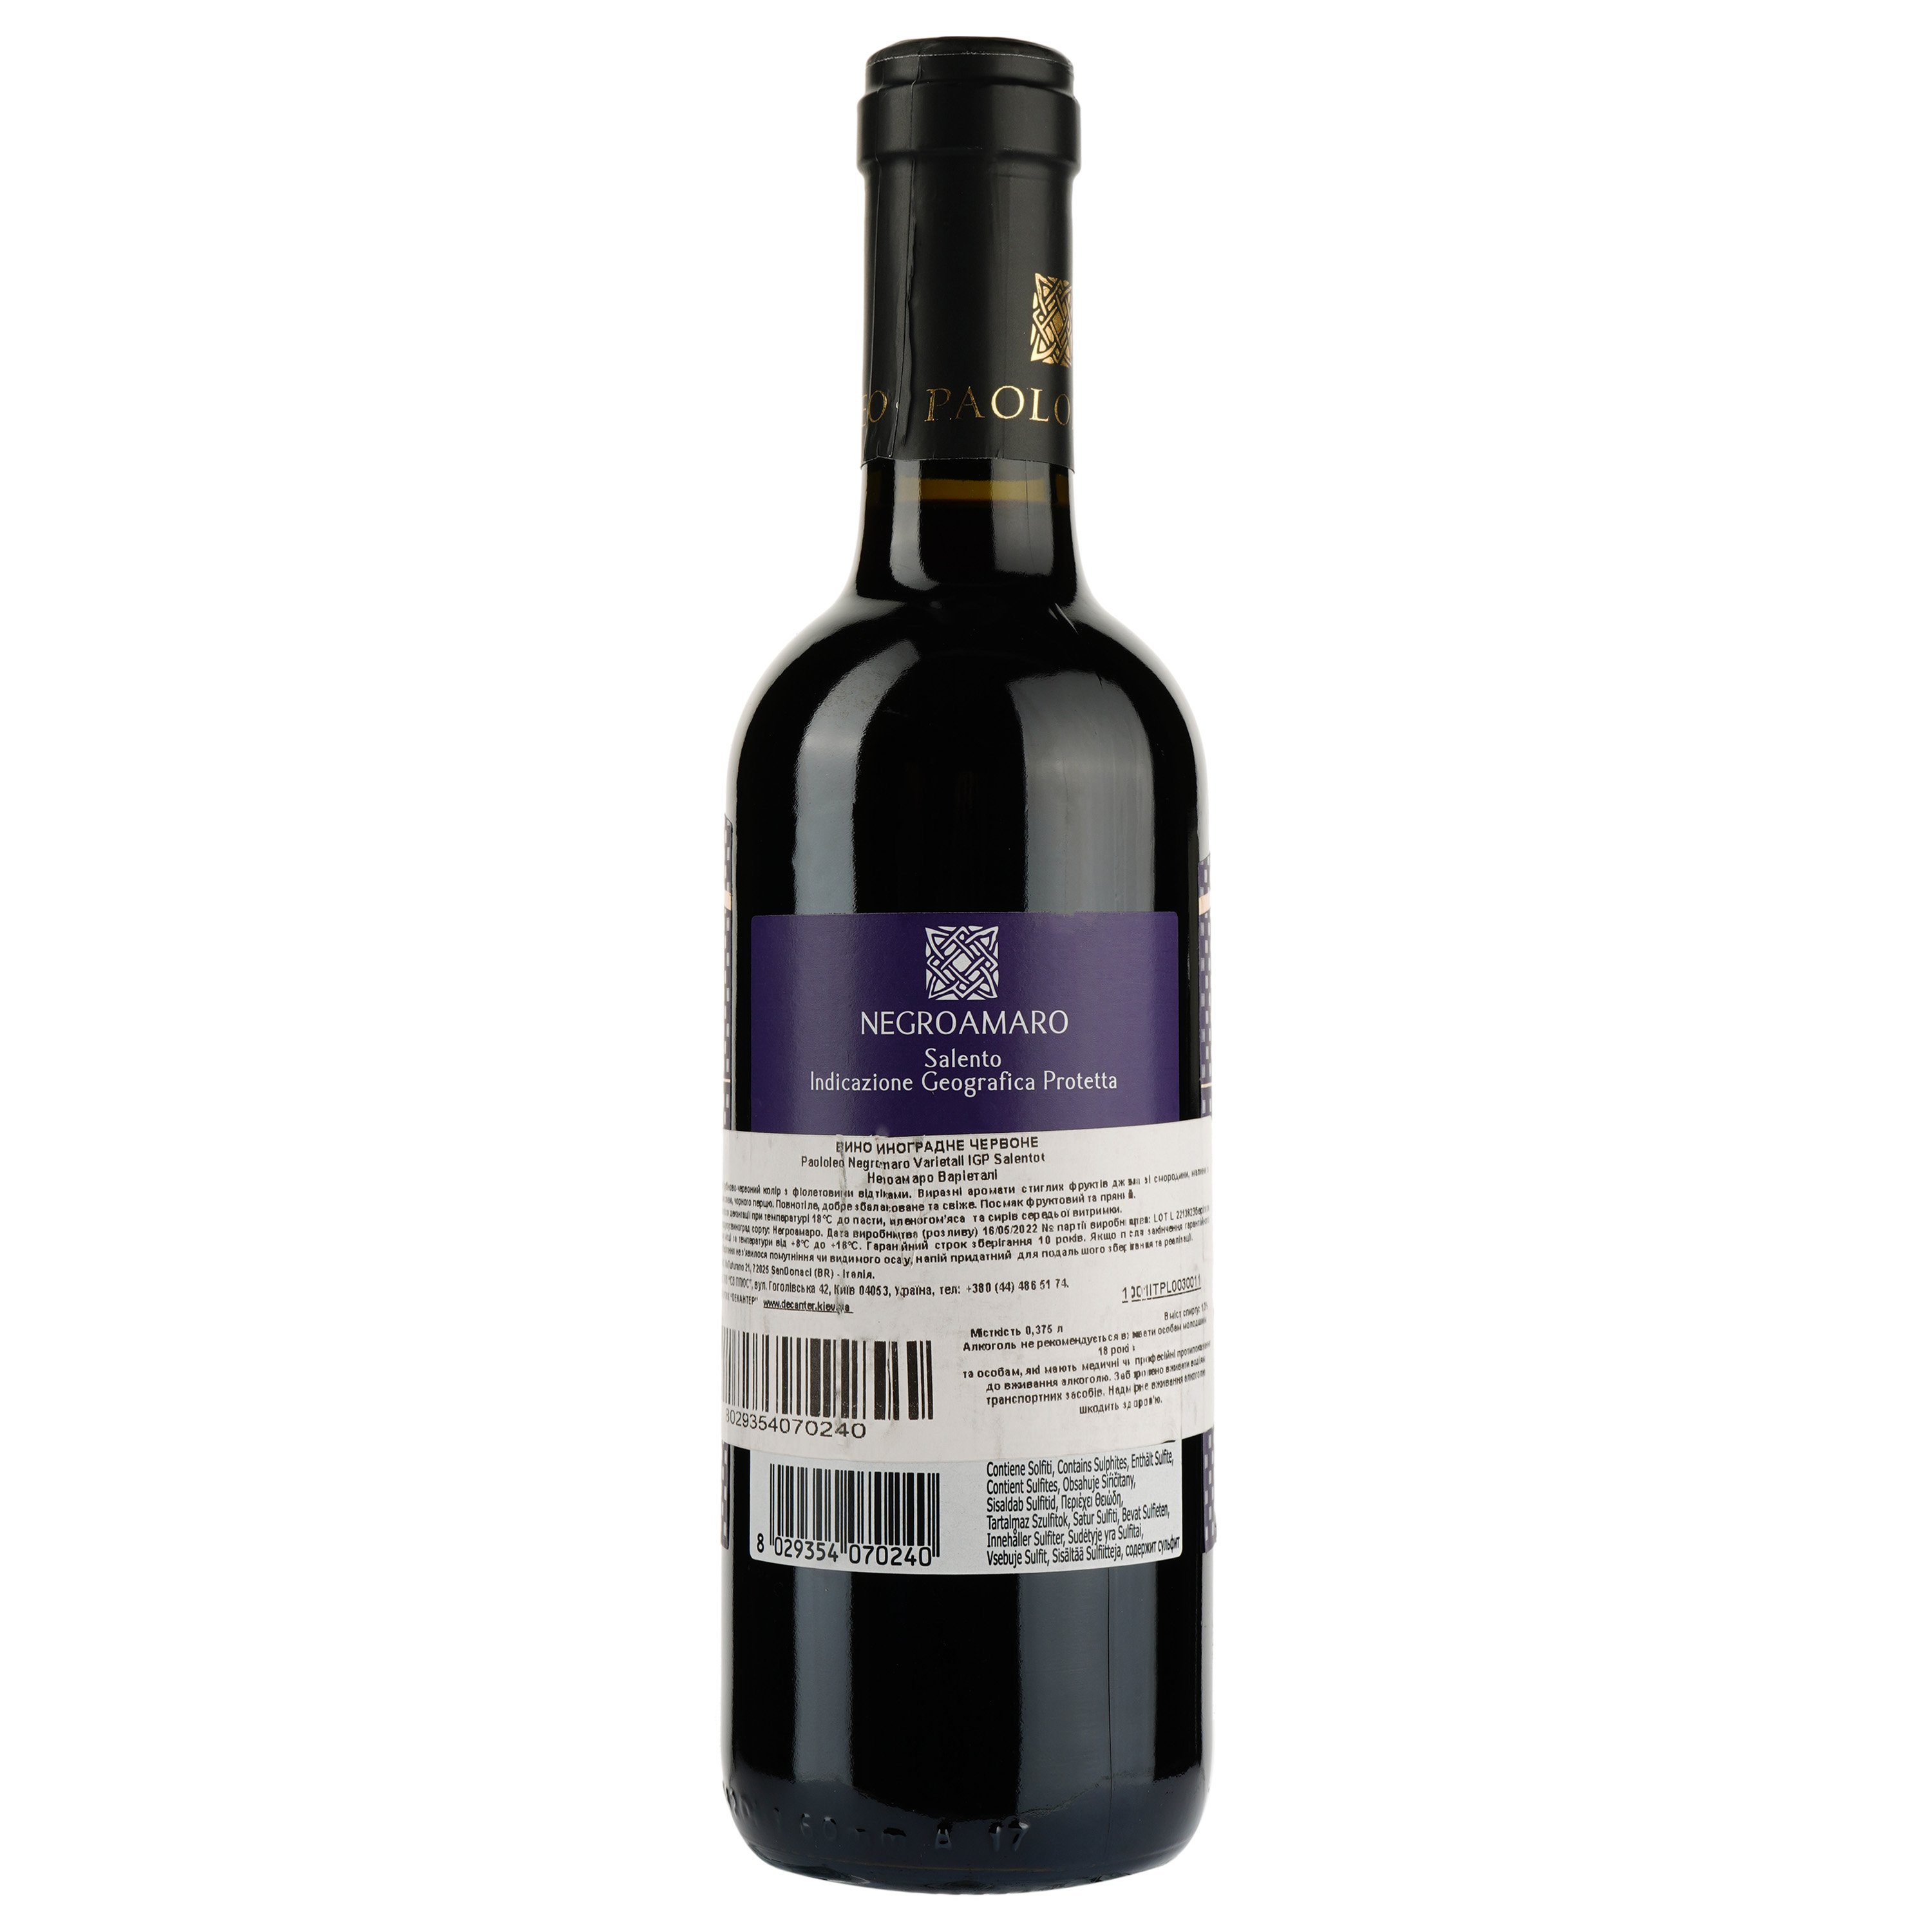 Вино Paololeo Negroamaro Varietali Salento IGP, красное, сухое, 0,375 л - фото 2